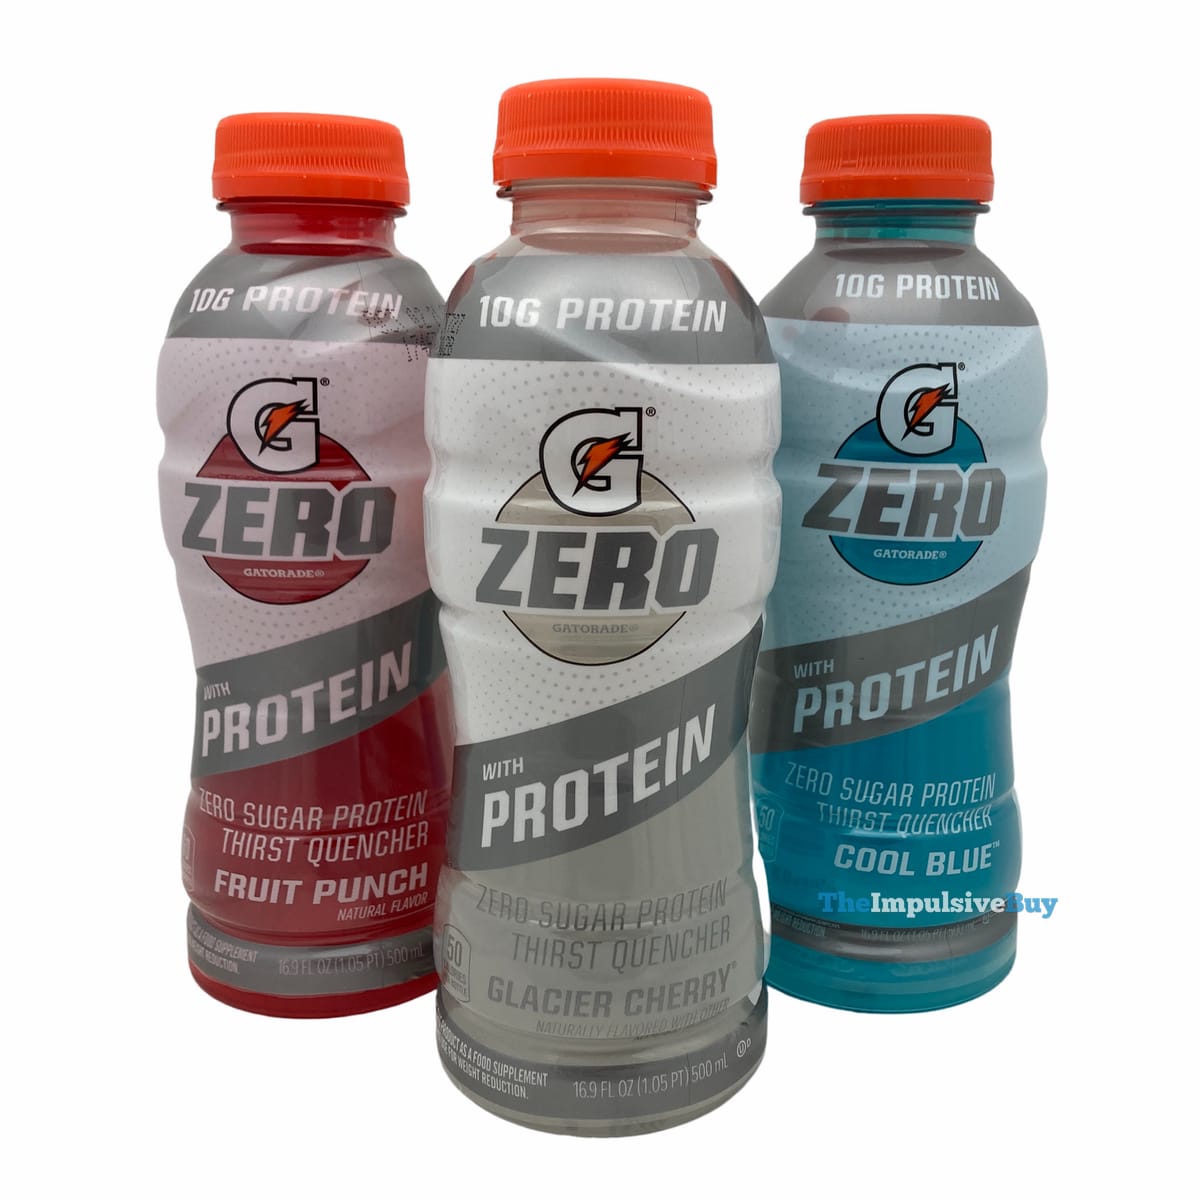 https://www.theimpulsivebuy.com/wordpress/wp-content/uploads/2021/04/Gatorade-Zero-with-Protein-Bottles.jpeg